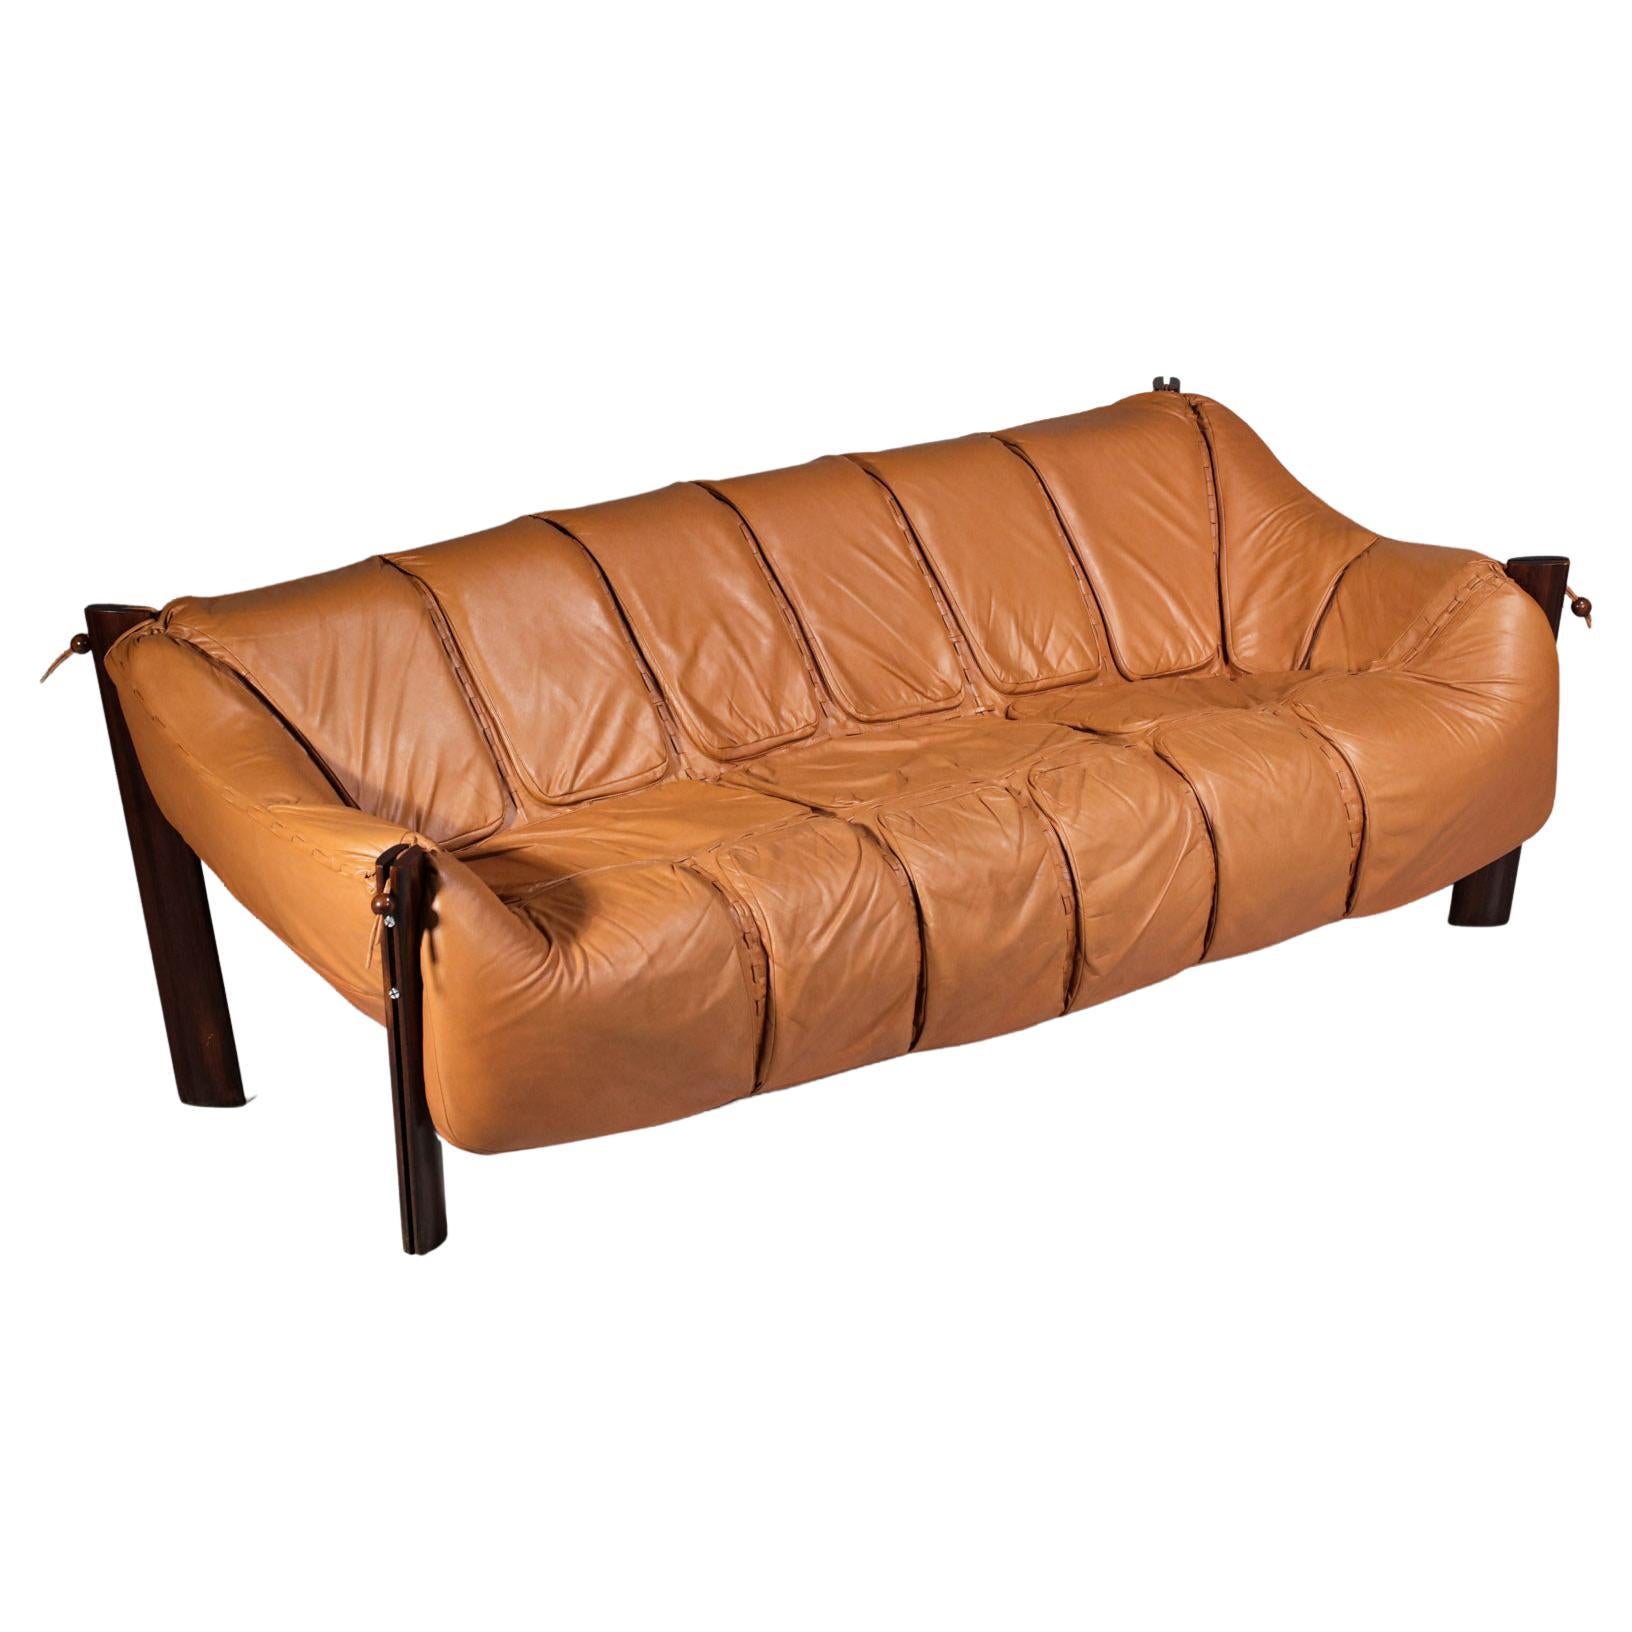 Rare Large Sofa Percival Lafer MP 211 Leather Camel Brazilian Design 60's